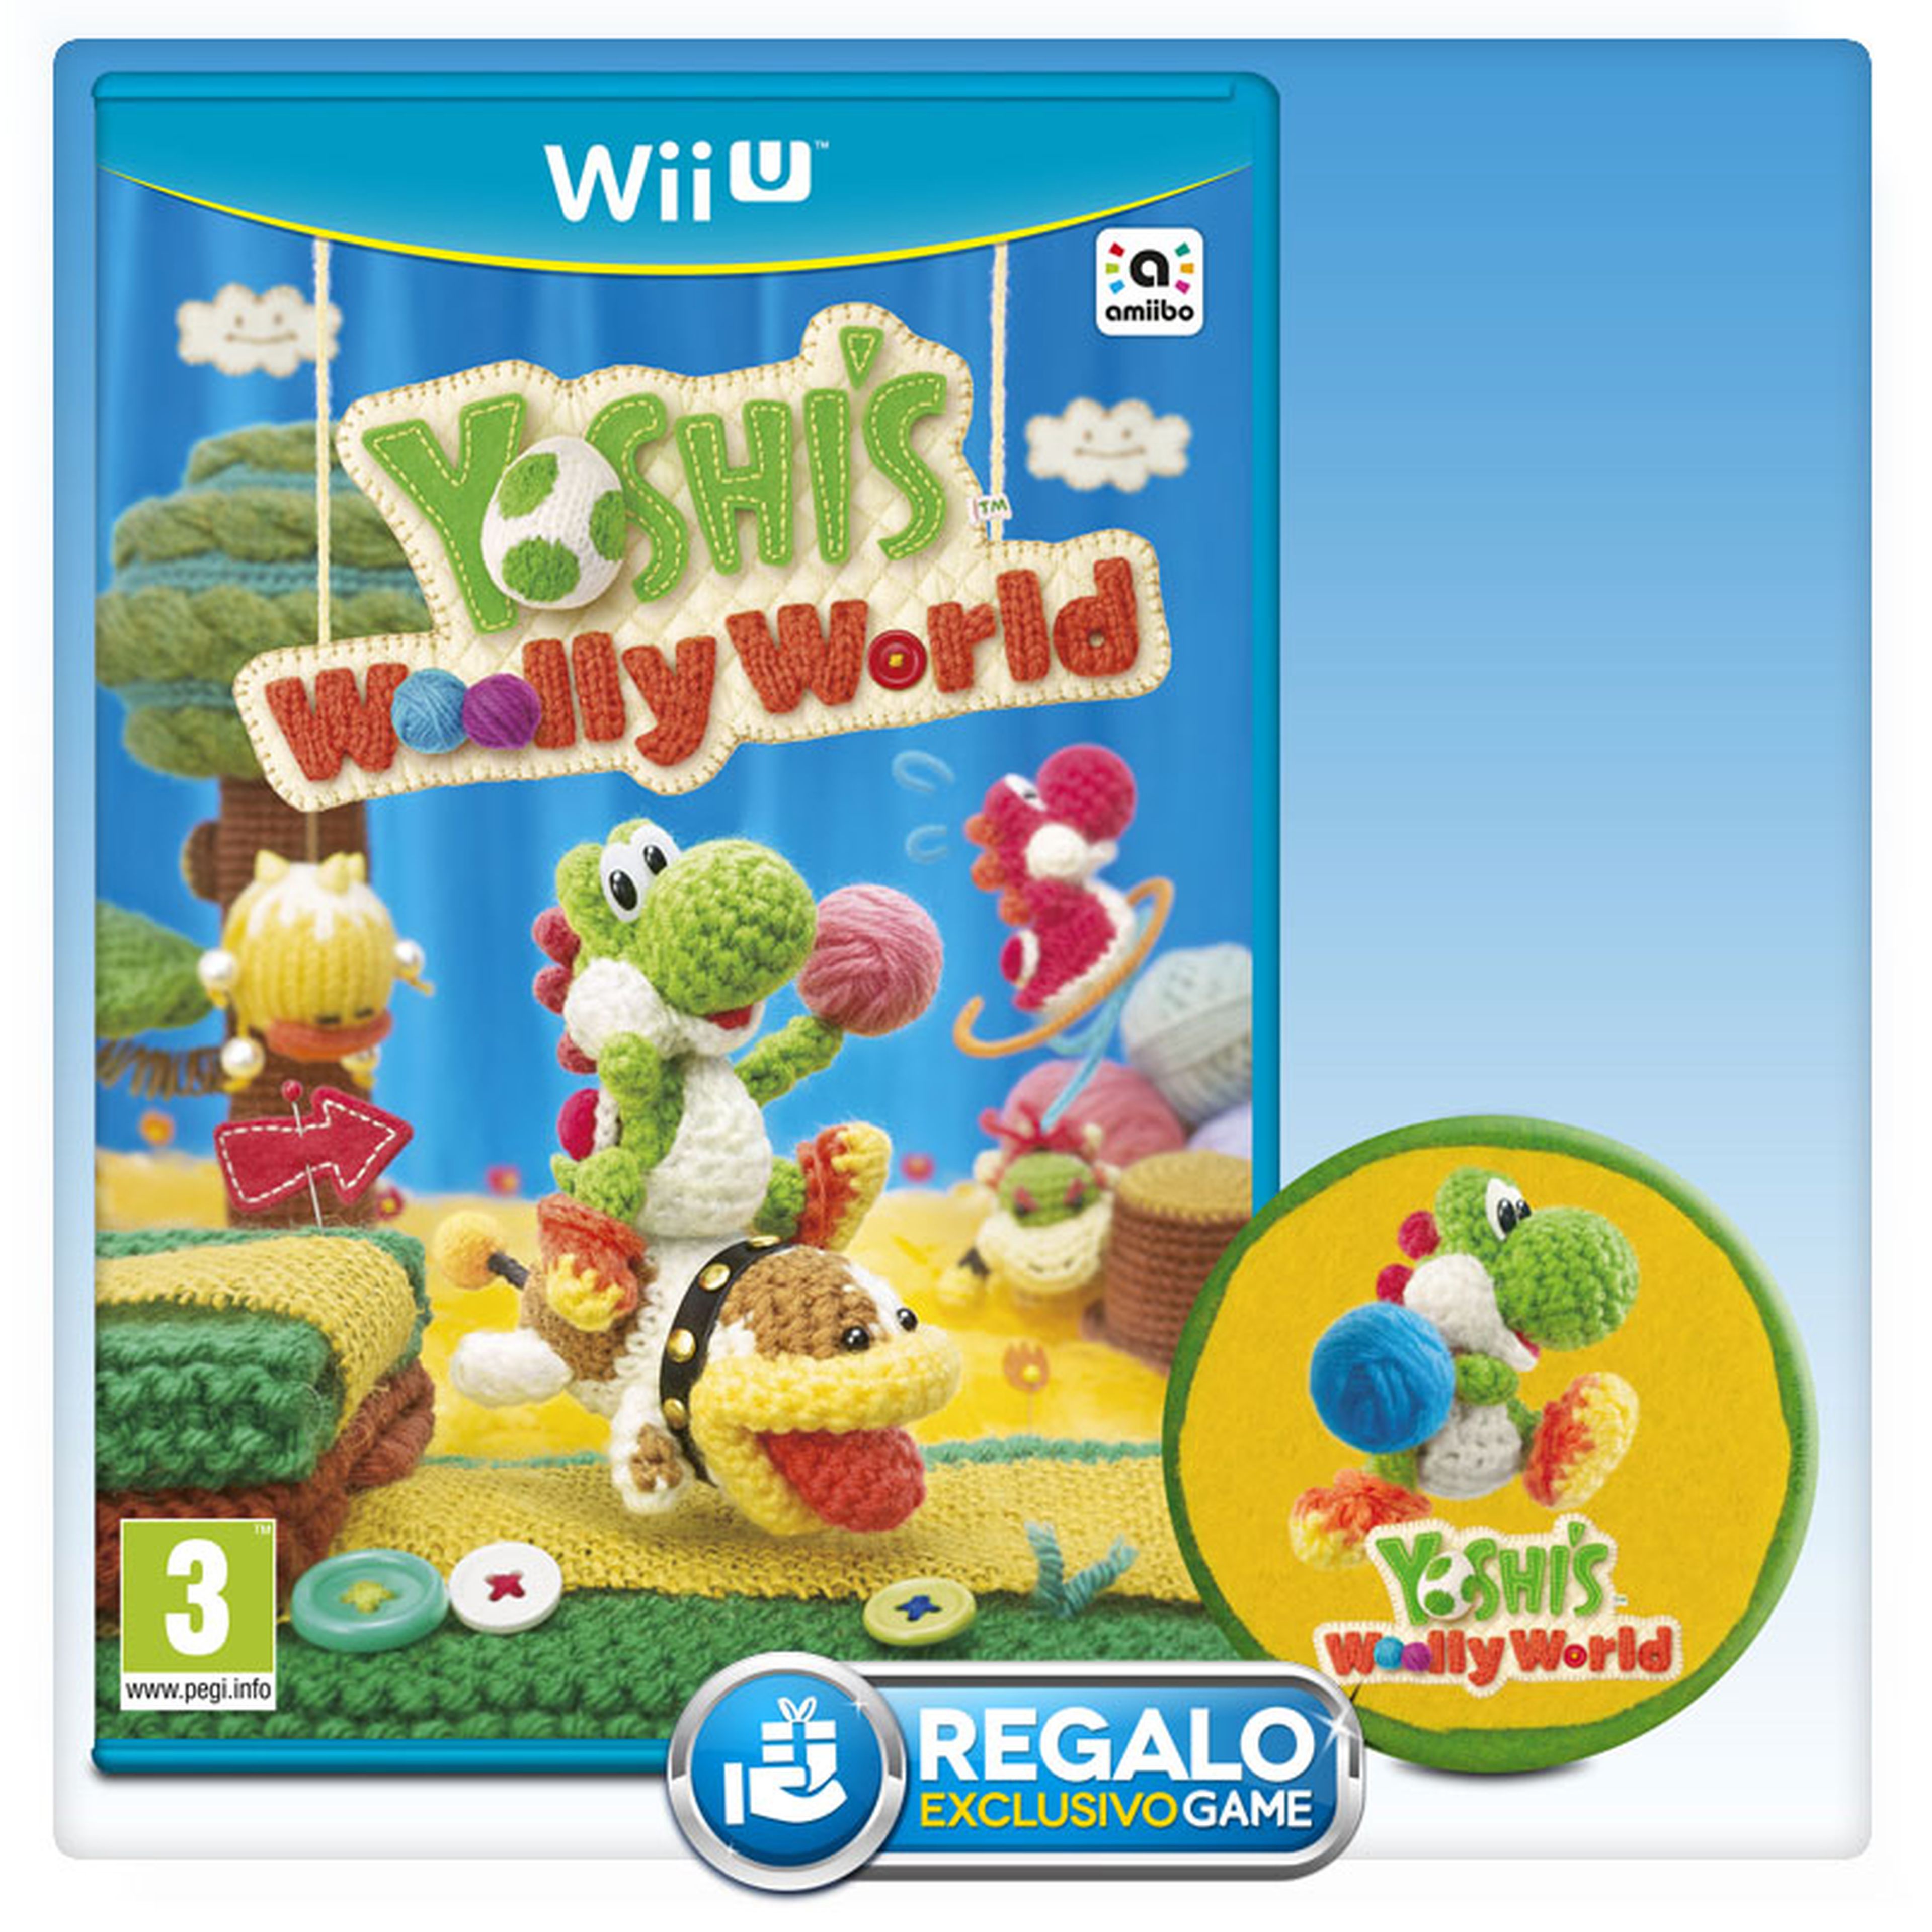 Yoshi's Woolly World, regalo exclusivo de reserva en GAME